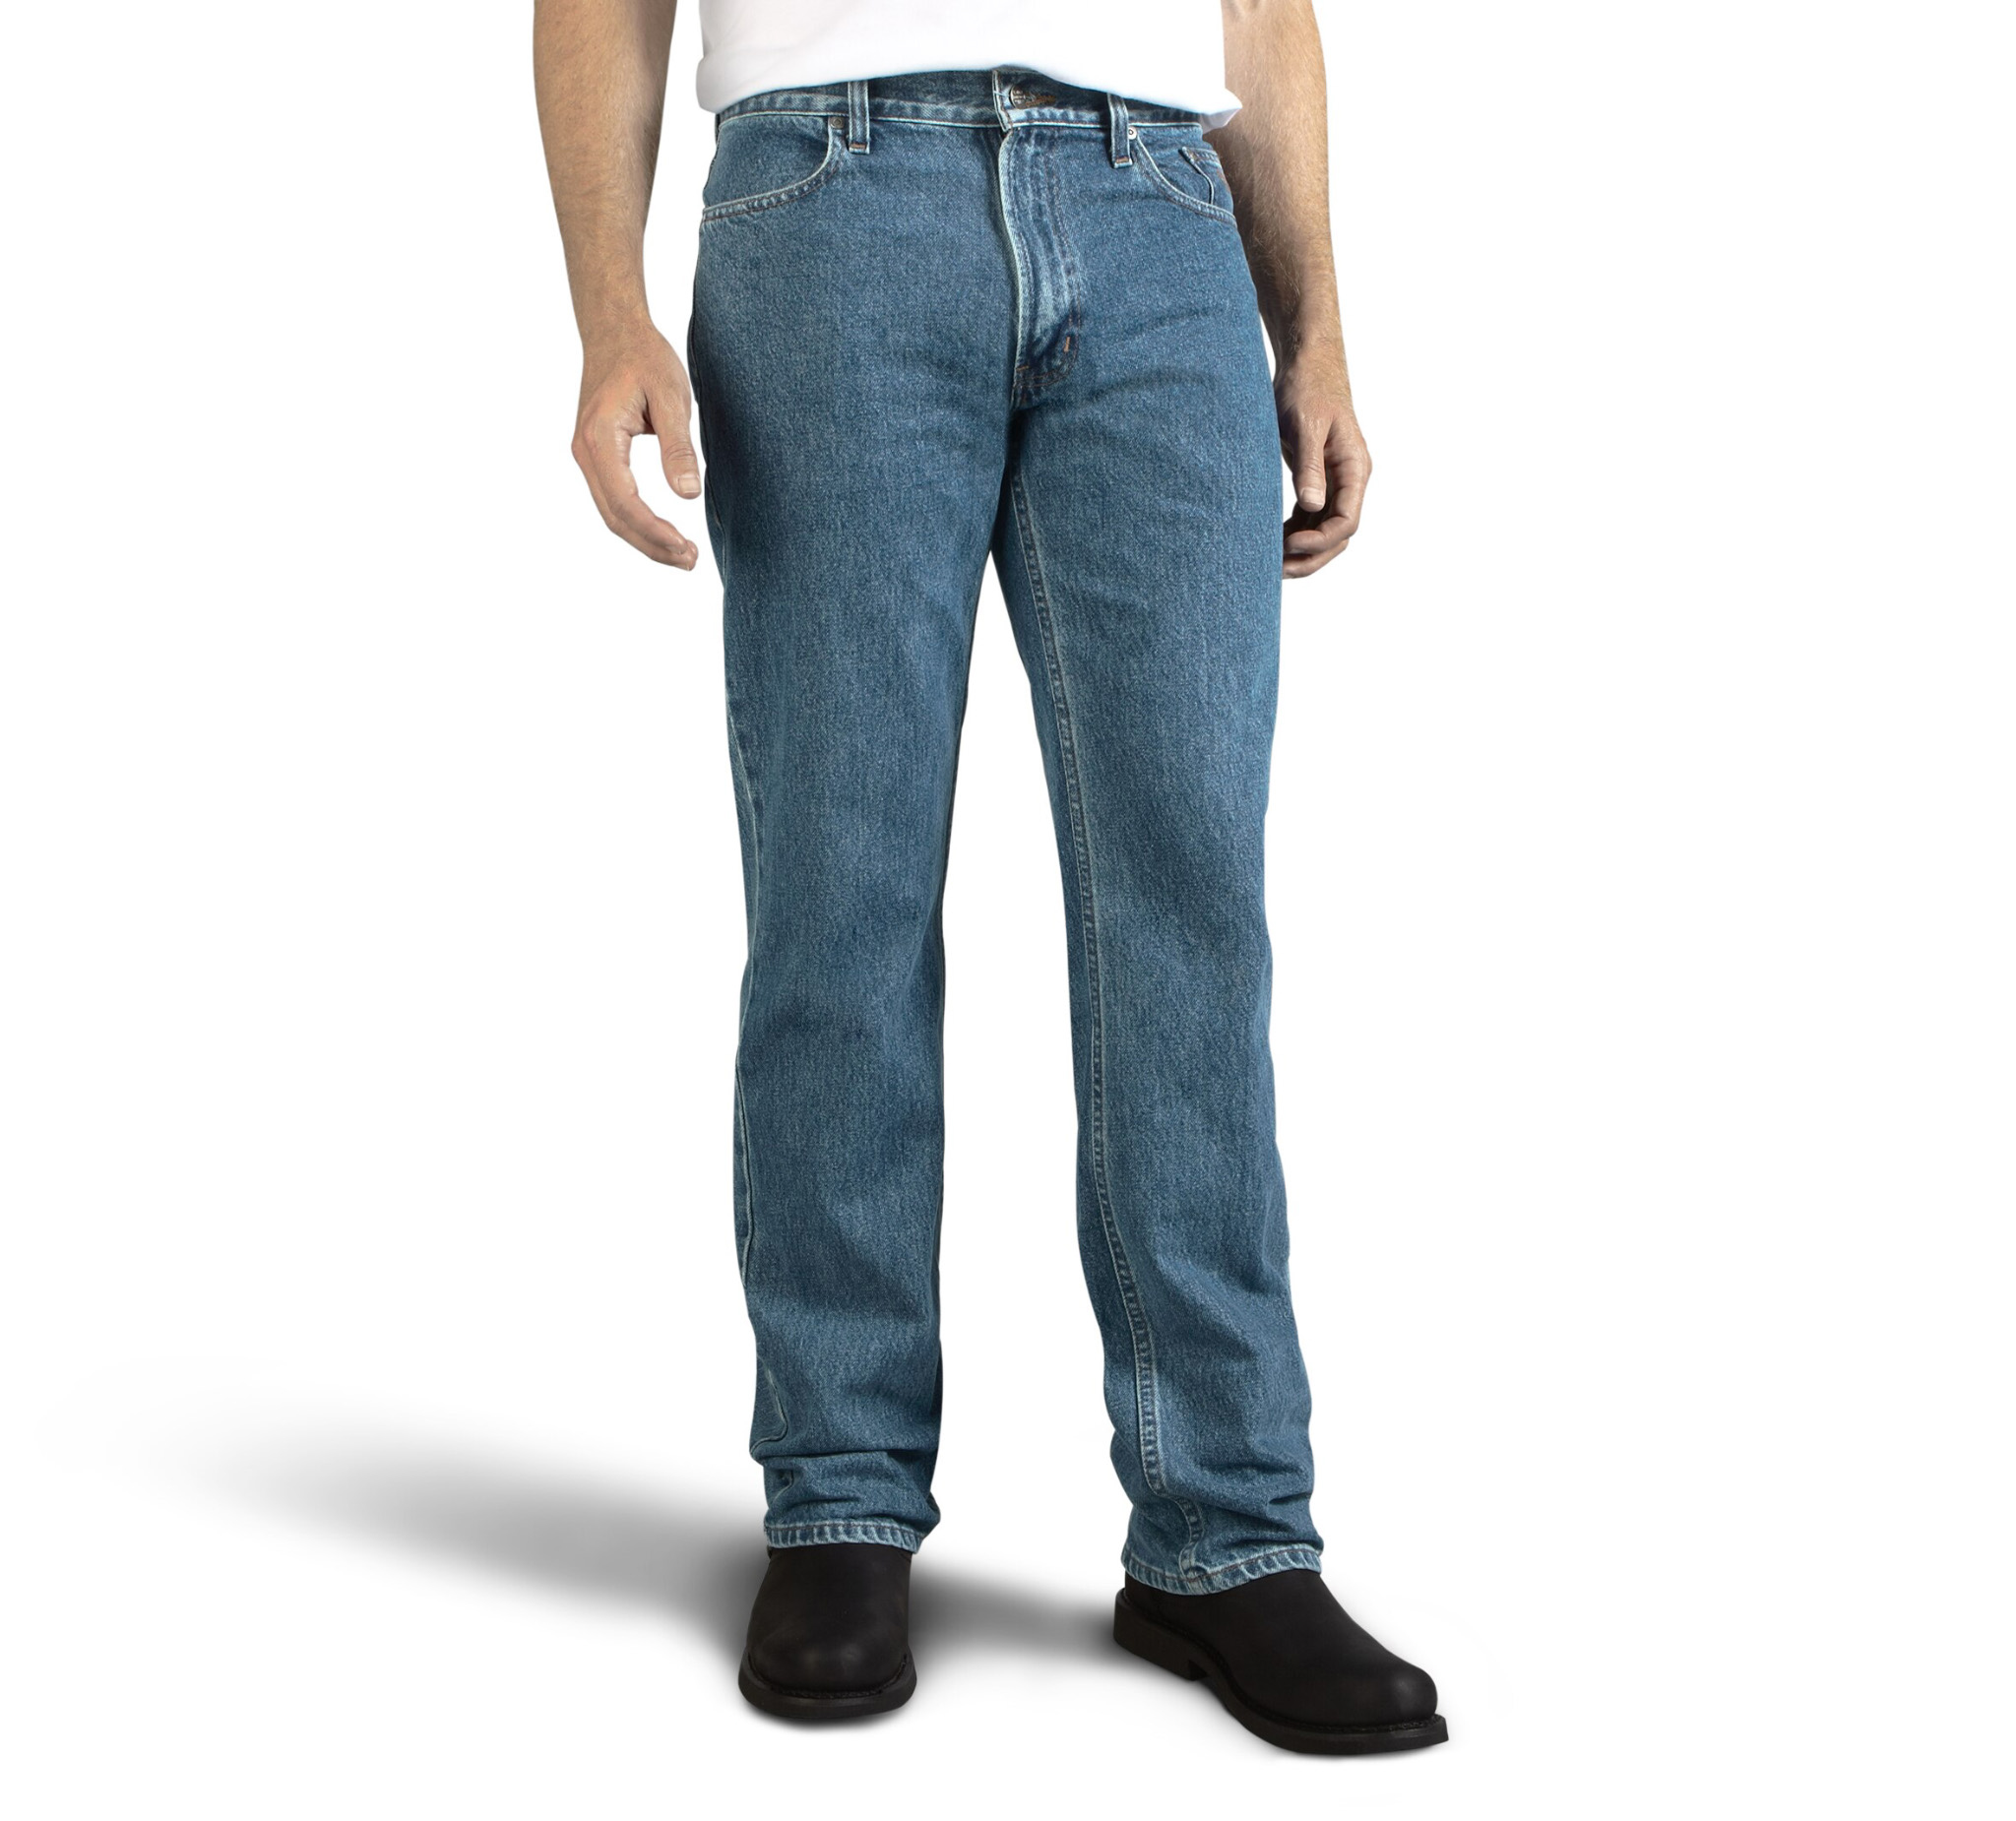 bell bottom blue jeans for sale